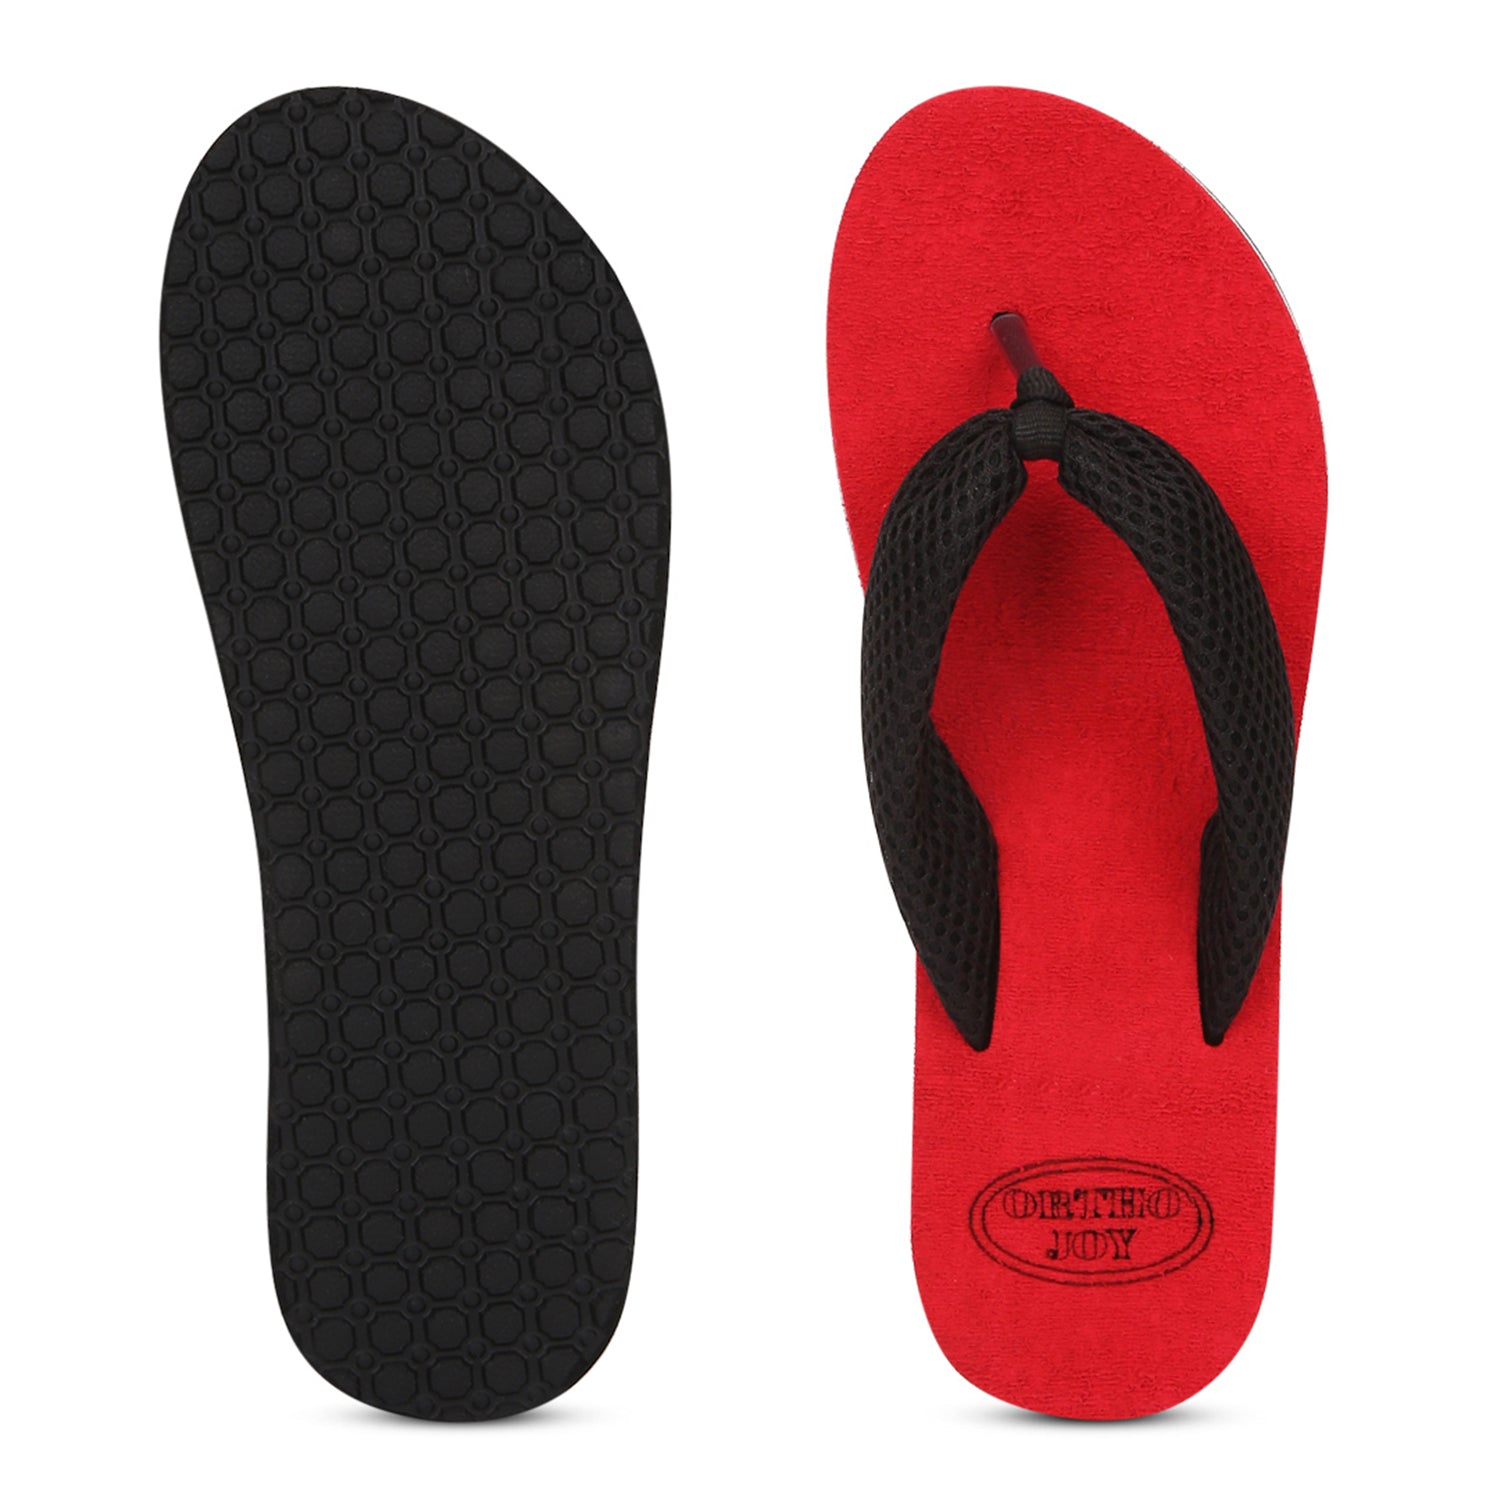 ORTHO JOY orthopaedic & diabetic slippers